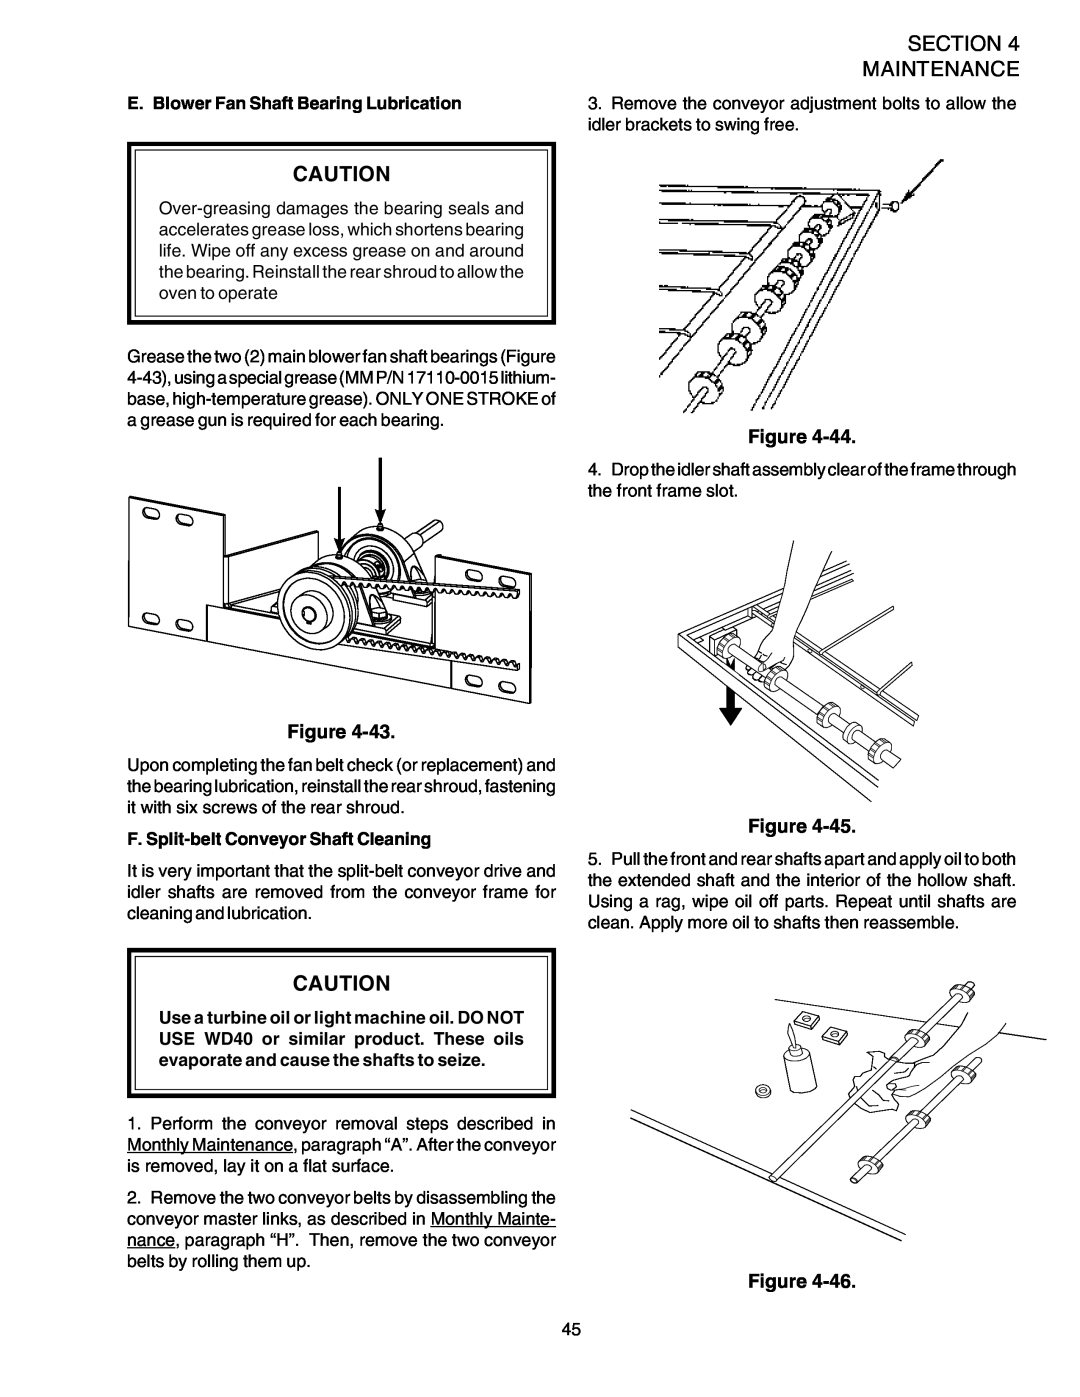 Middleby Marshall PS540 installation manual Section, Maintenance, E. Blower Fan Shaft Bearing Lubrication 